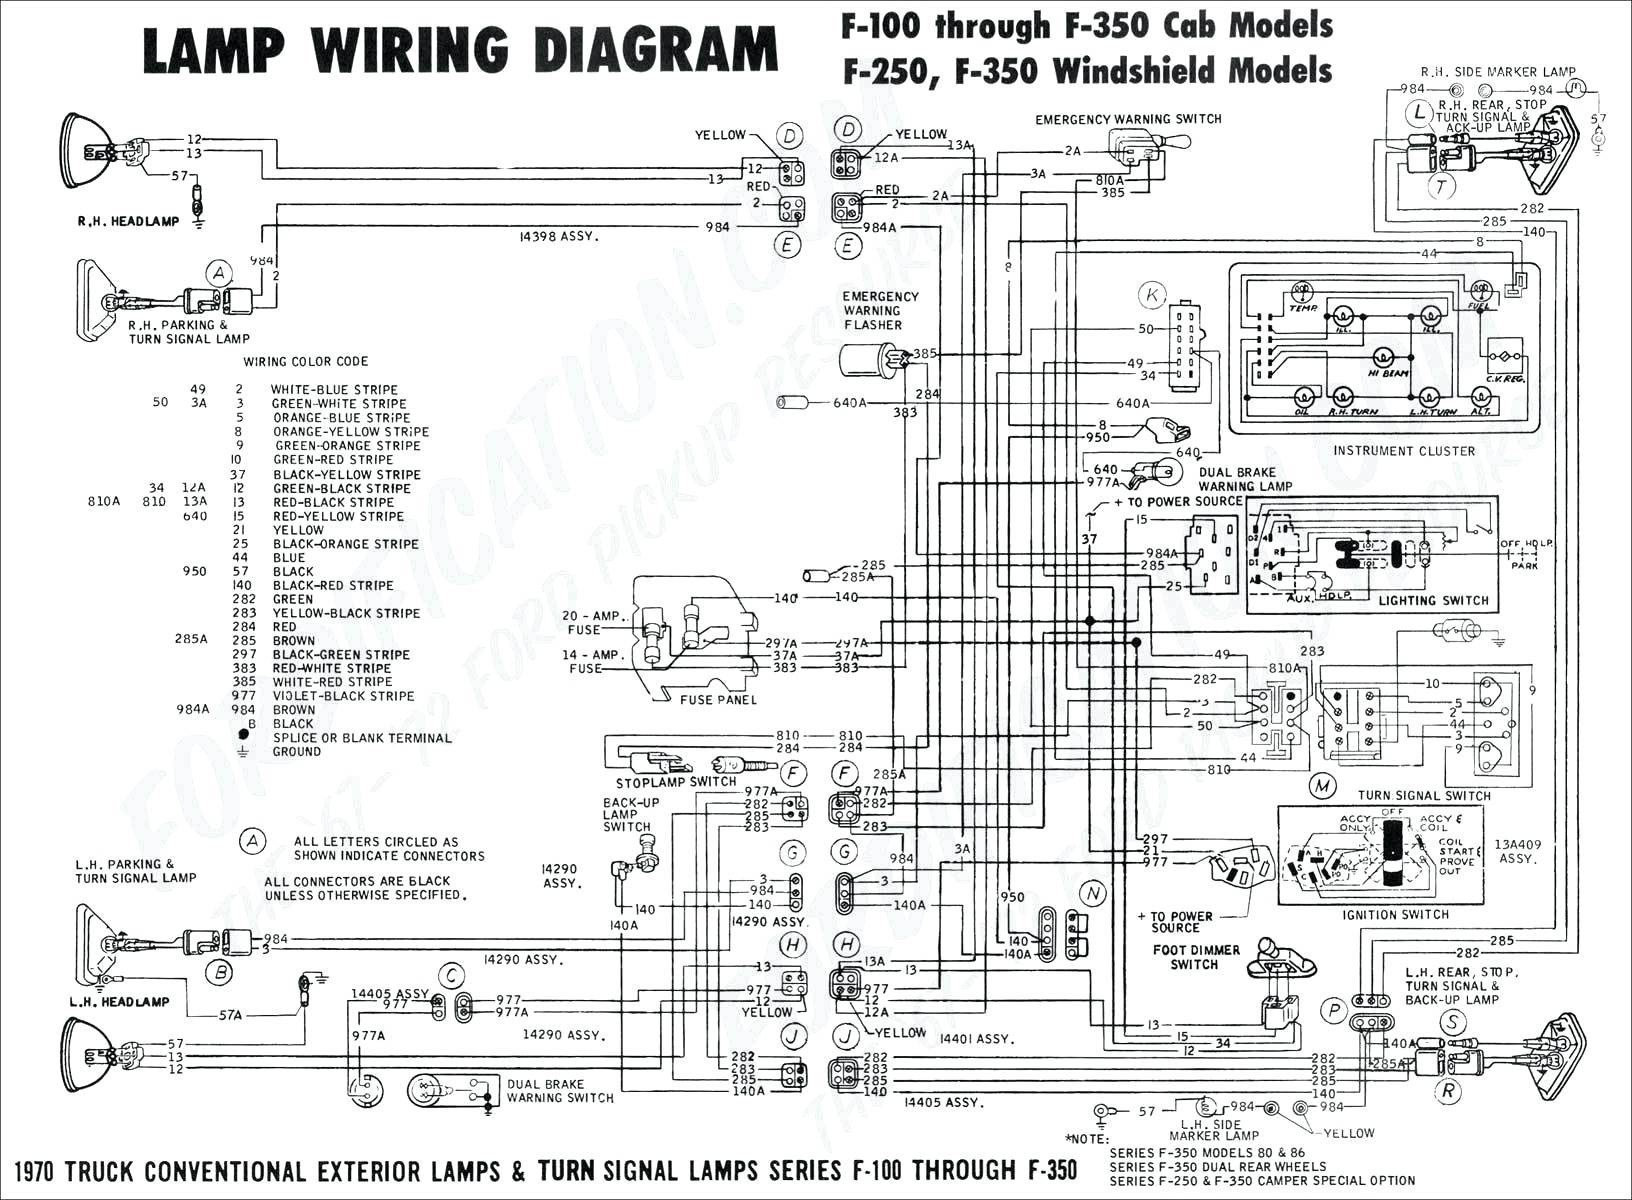 1999 Gmc Yukon Engine Diagram 2001 F250 Engine Diagram Experts Wiring Diagram • Of 1999 Gmc Yukon Engine Diagram